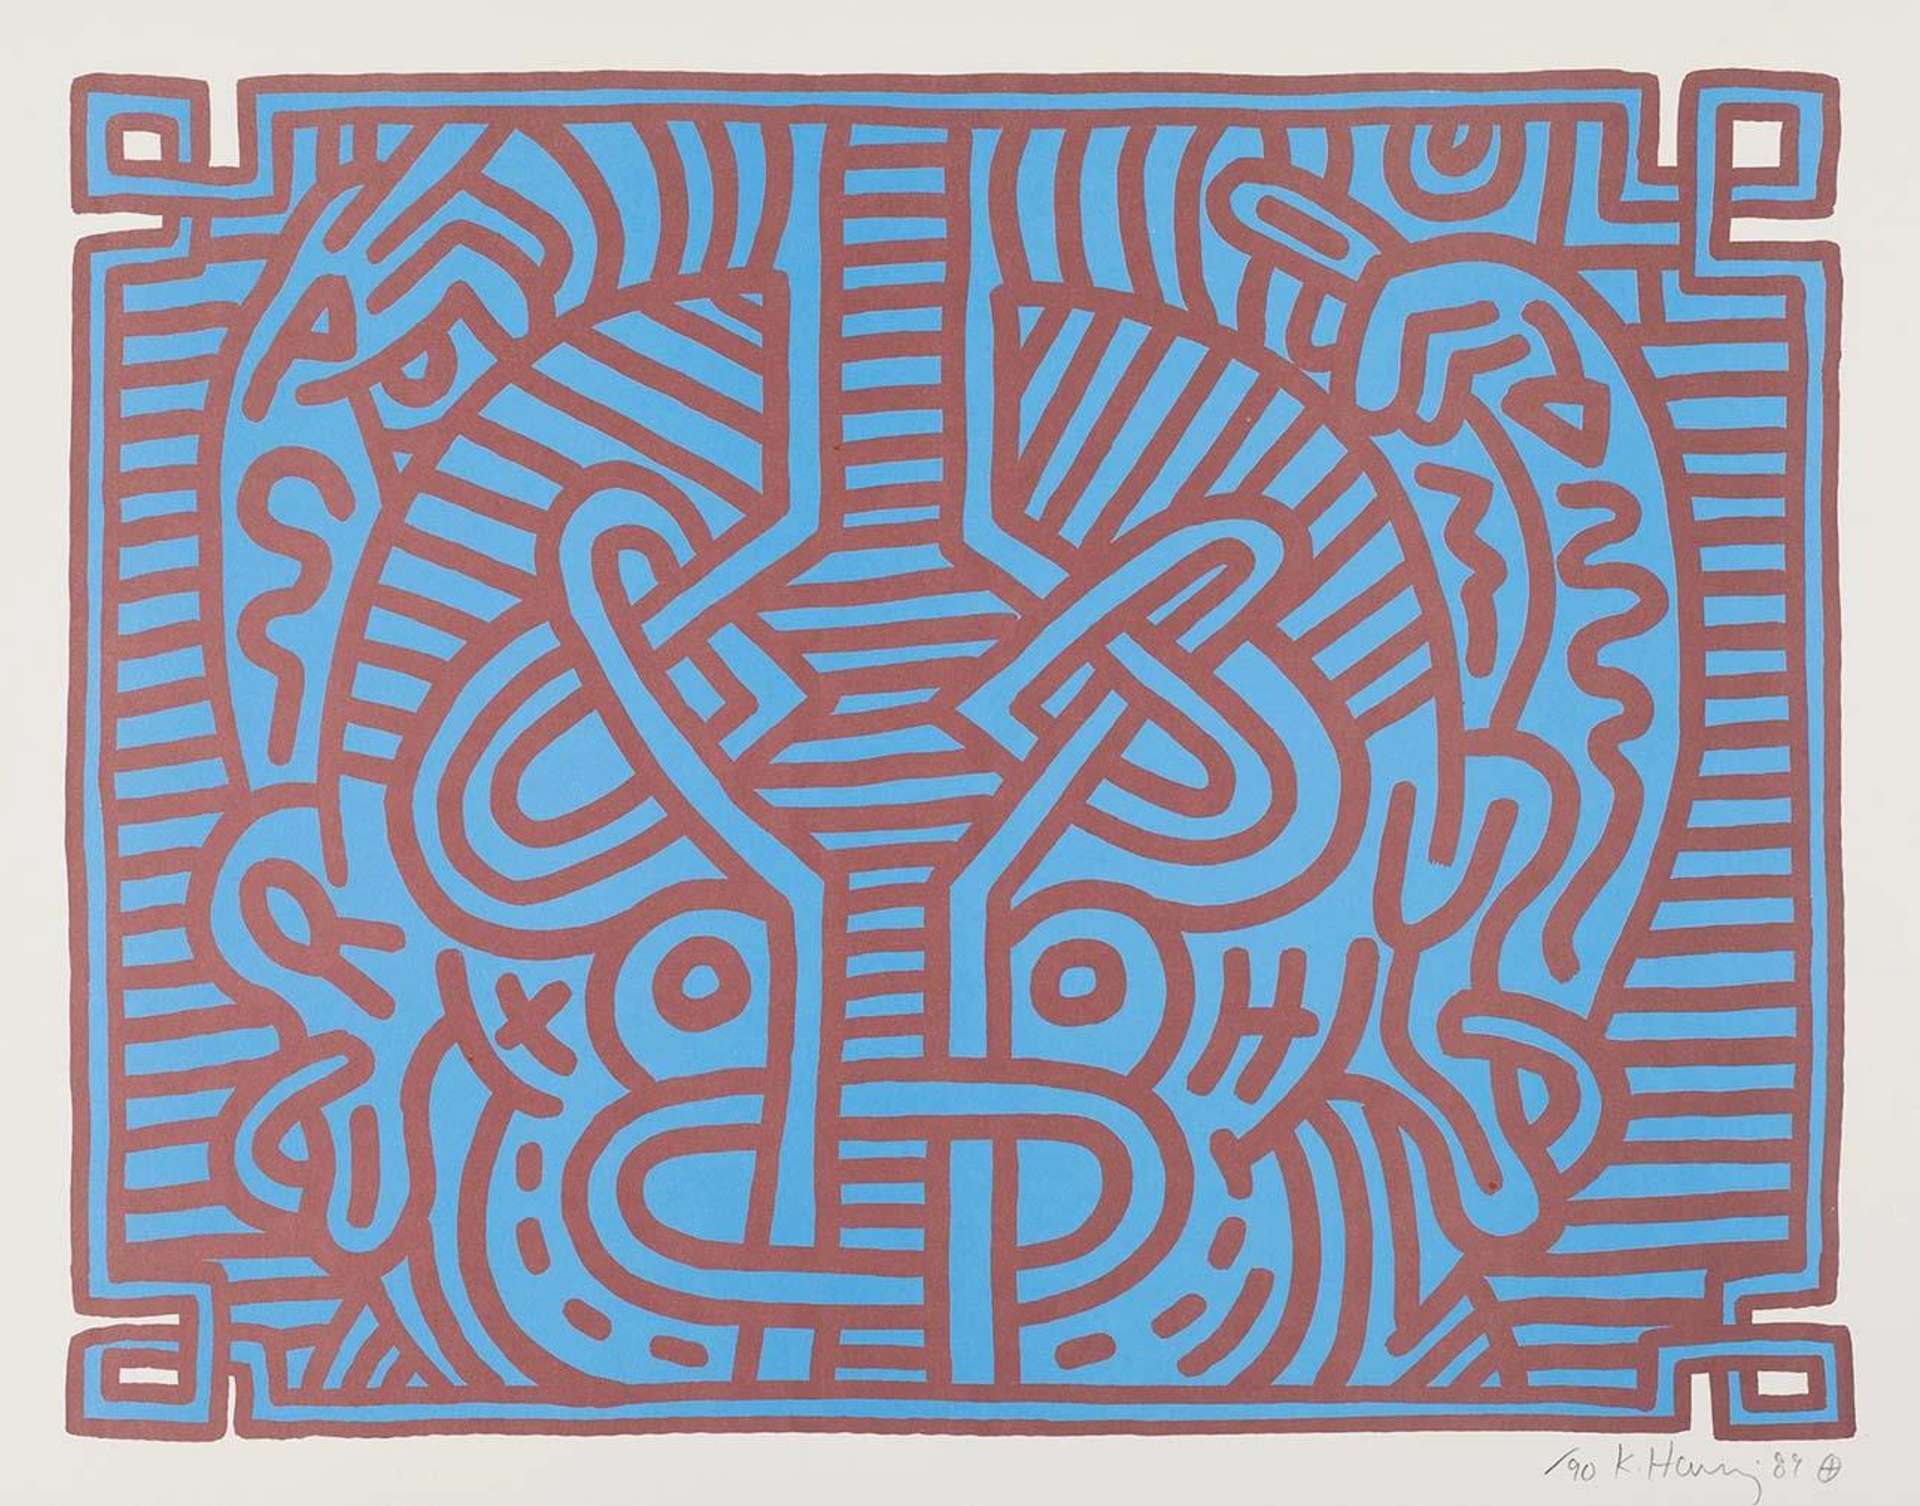 Chocolate Buddha 1 - Signed Print by Keith Haring 1989 - MyArtBroker